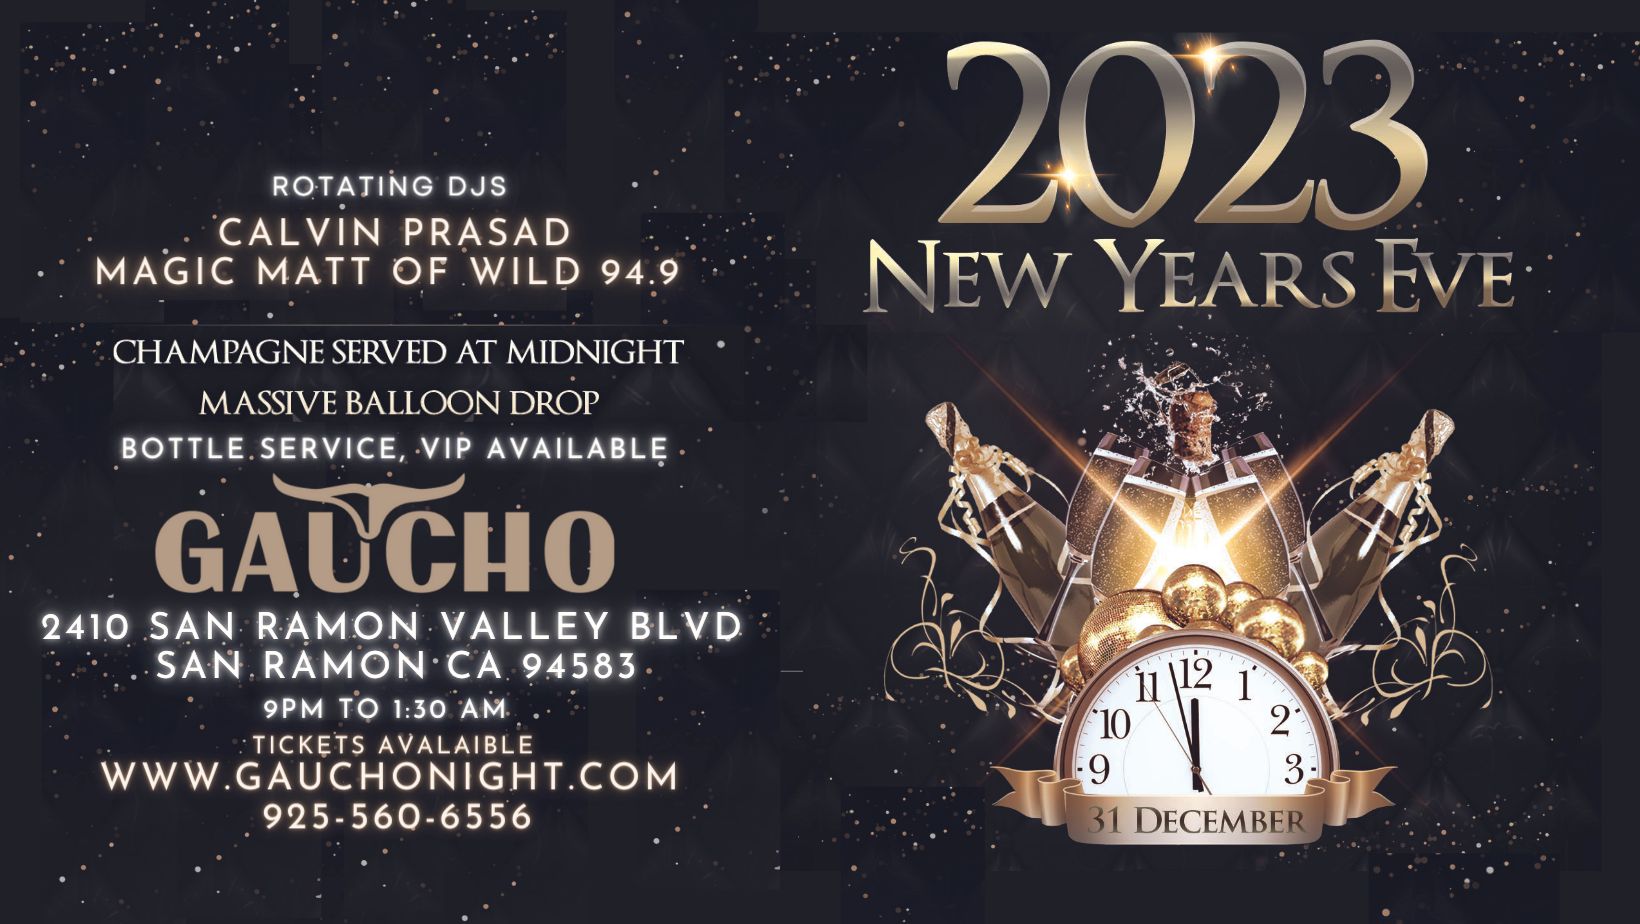 New Year's Eve Party 2023 Gaucho Nightclub San Ramon, San Ramon, California, United States